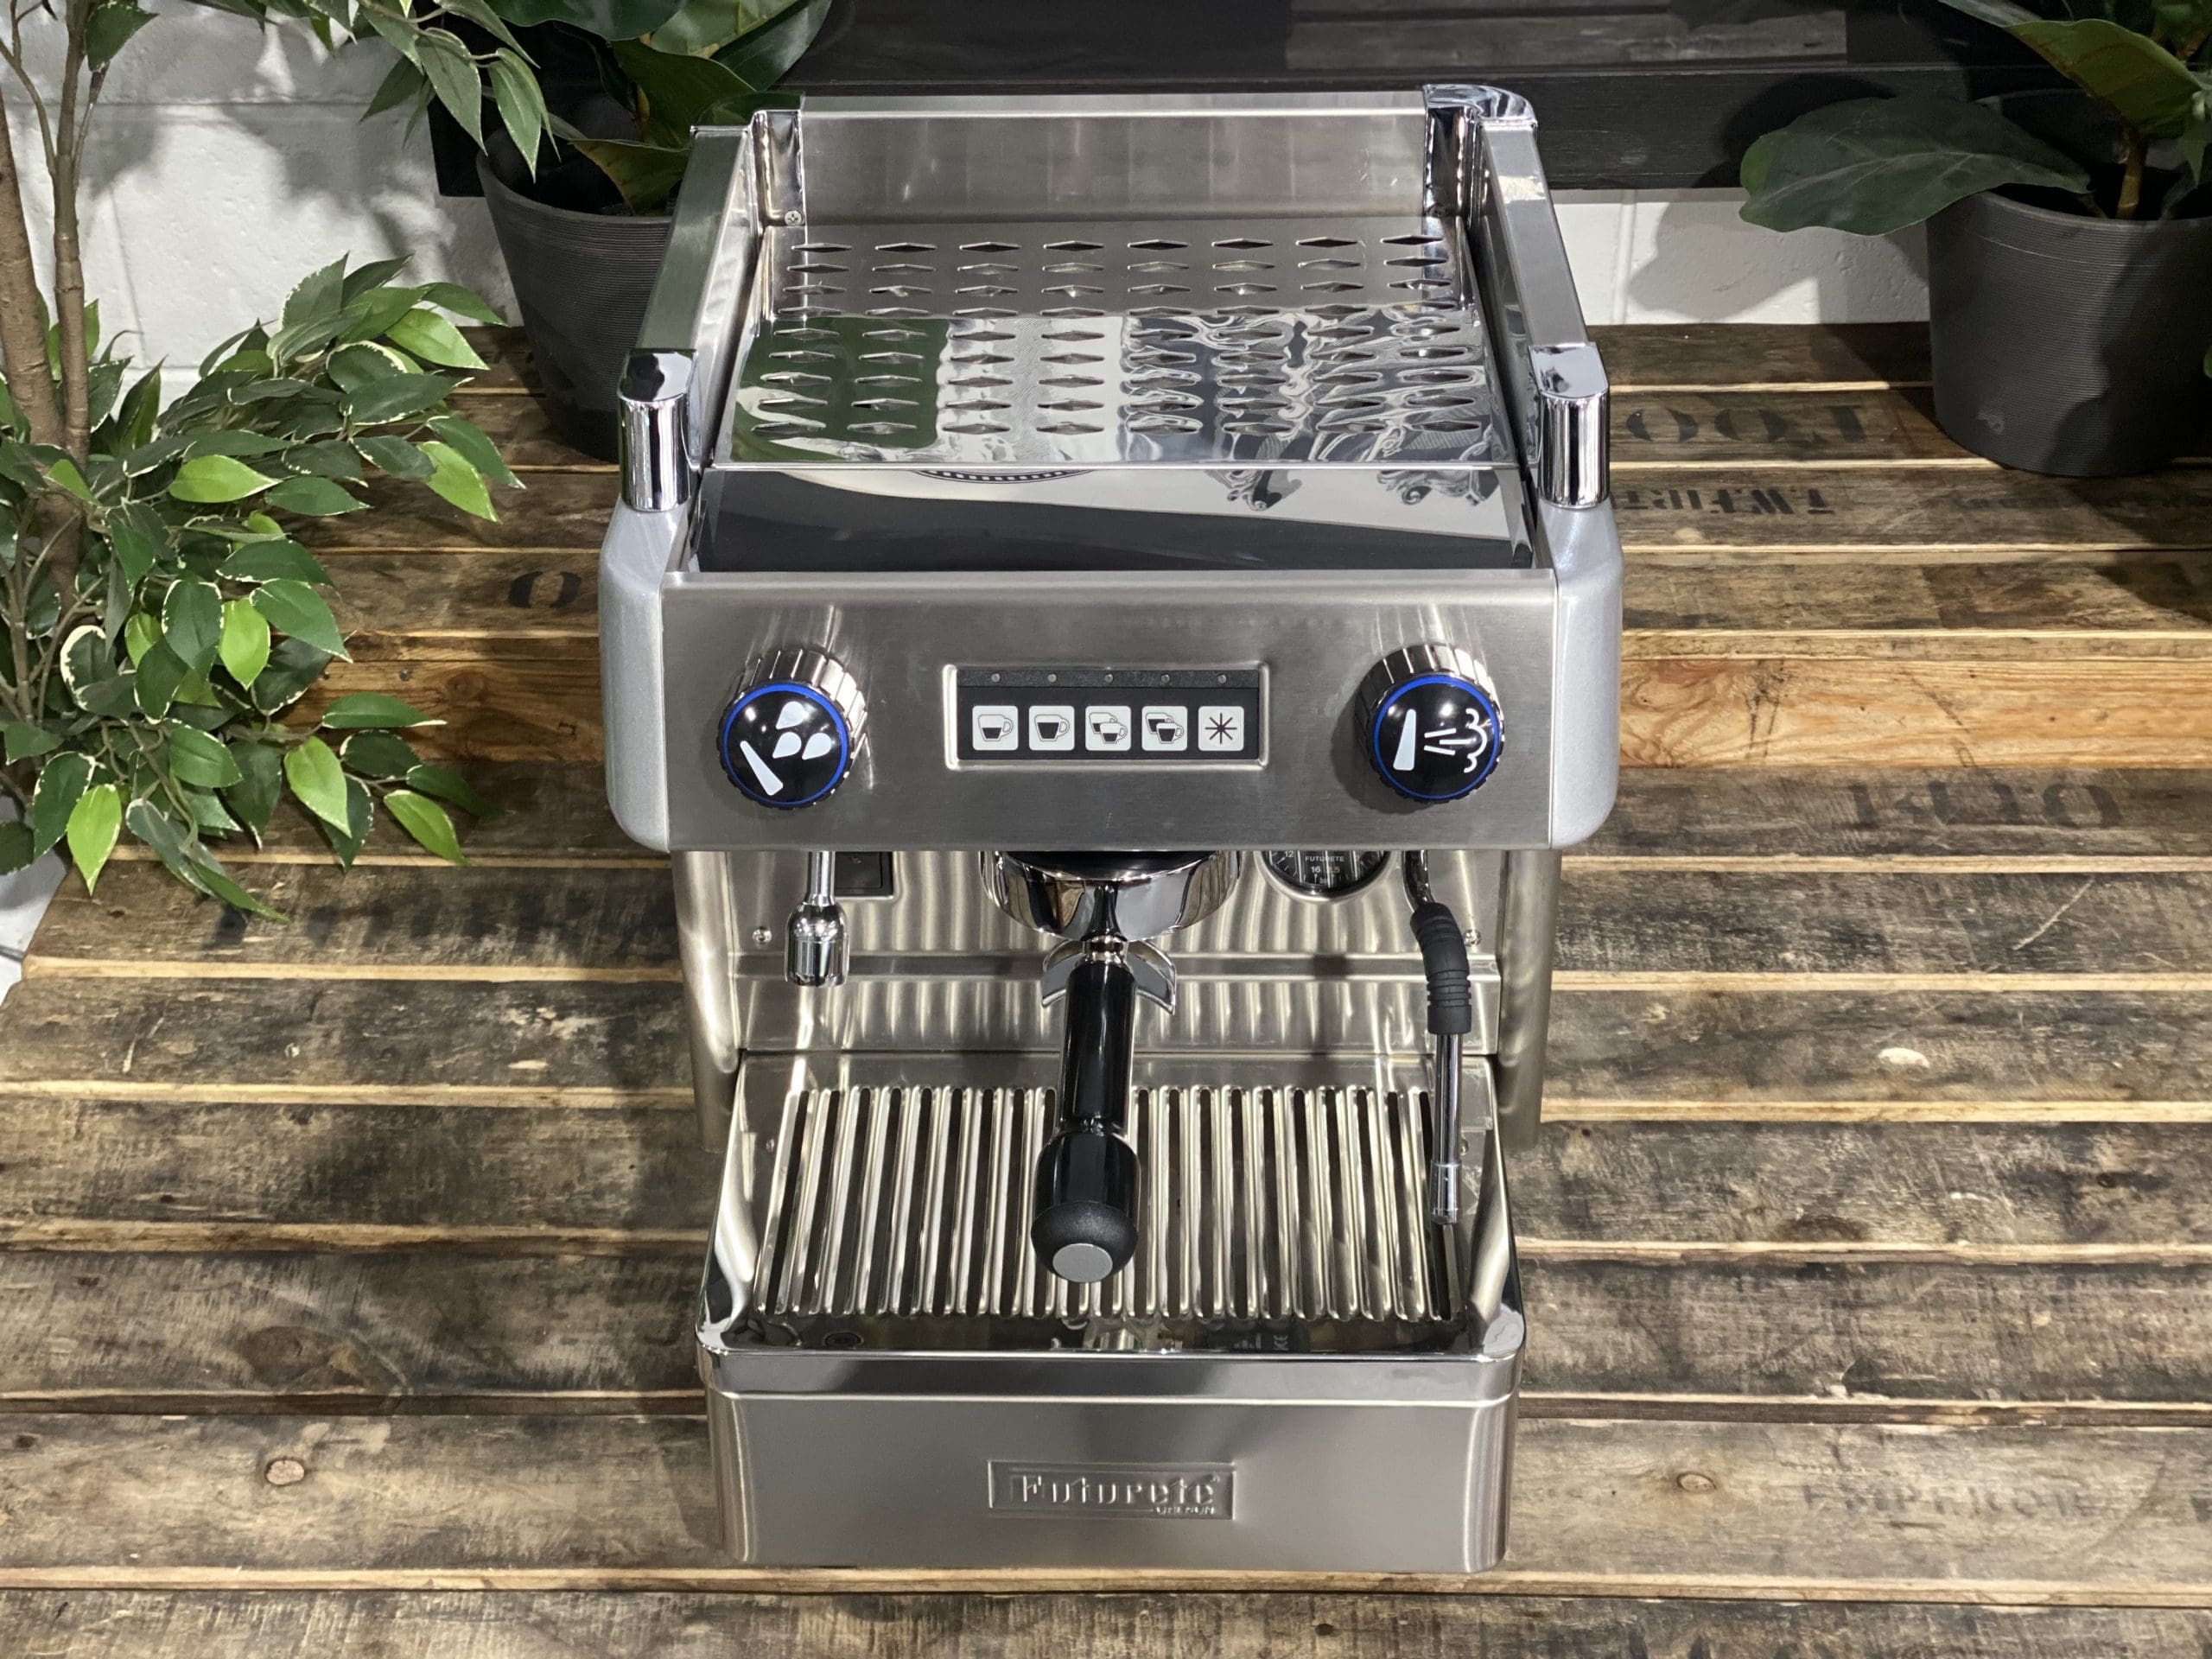 Futurete - Oberon Espresso Machine - 2+3 Group Sale!